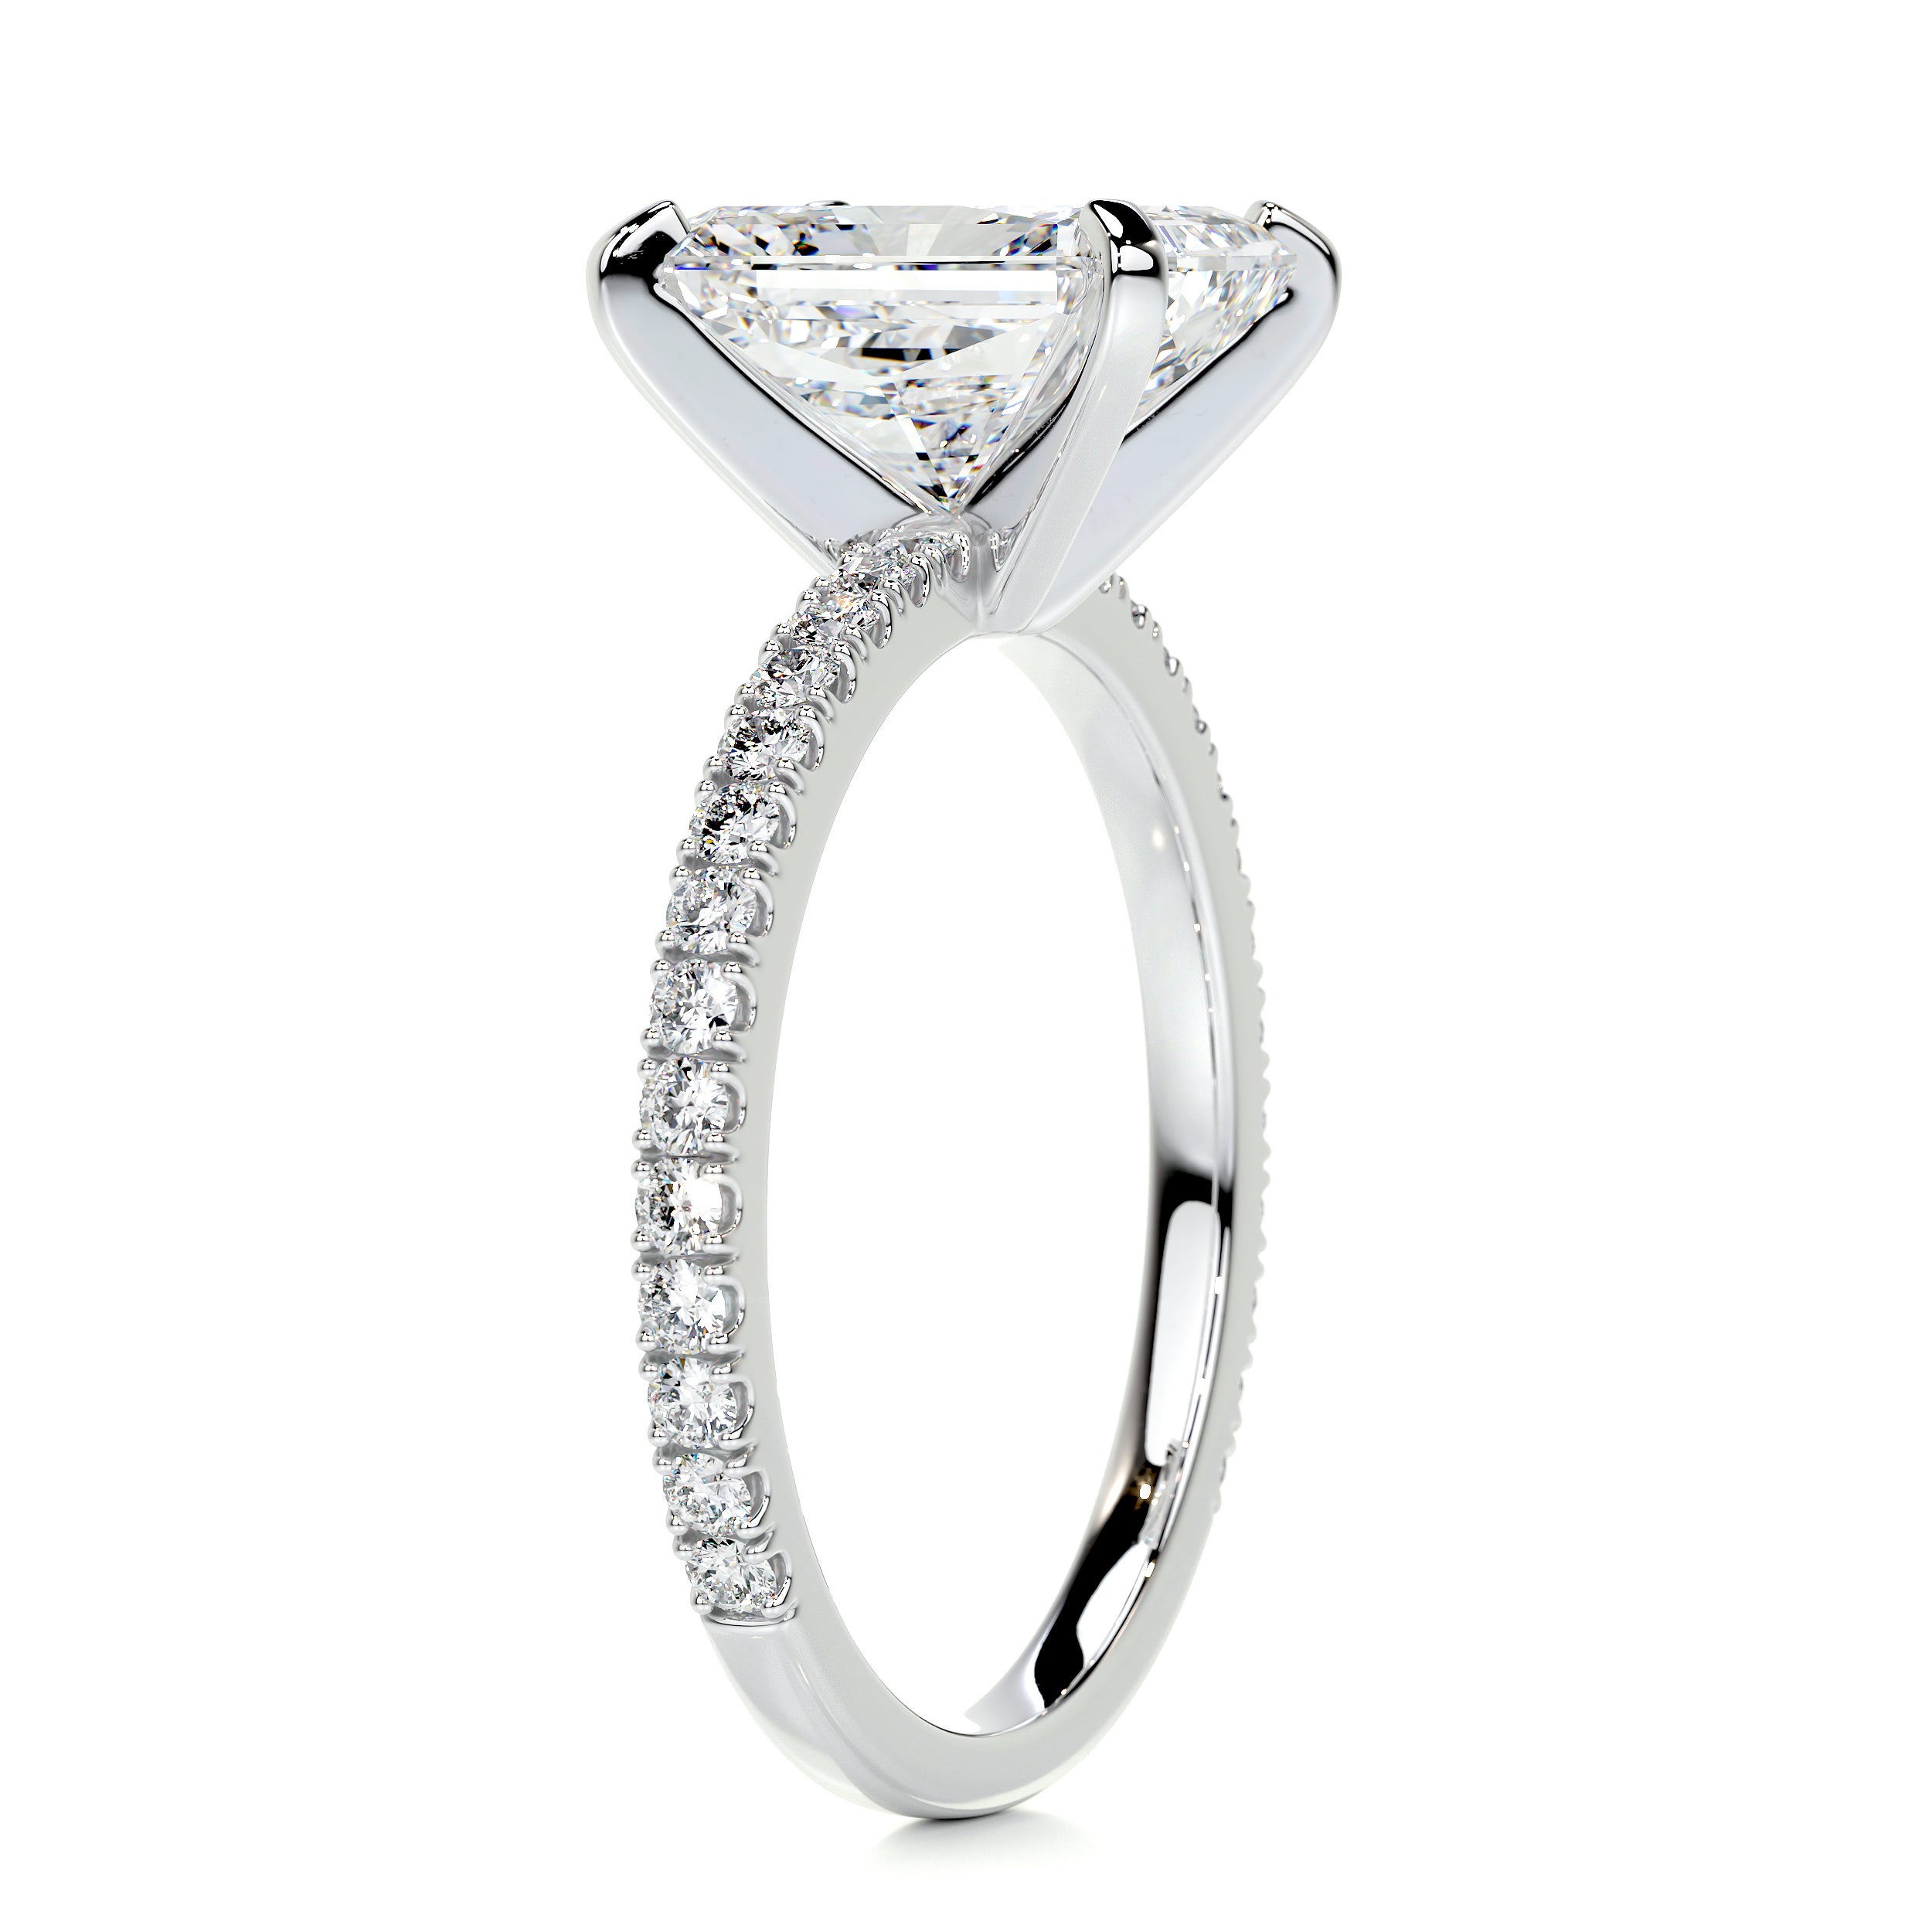 Audrey Diamond Engagement Ring -18K White Gold